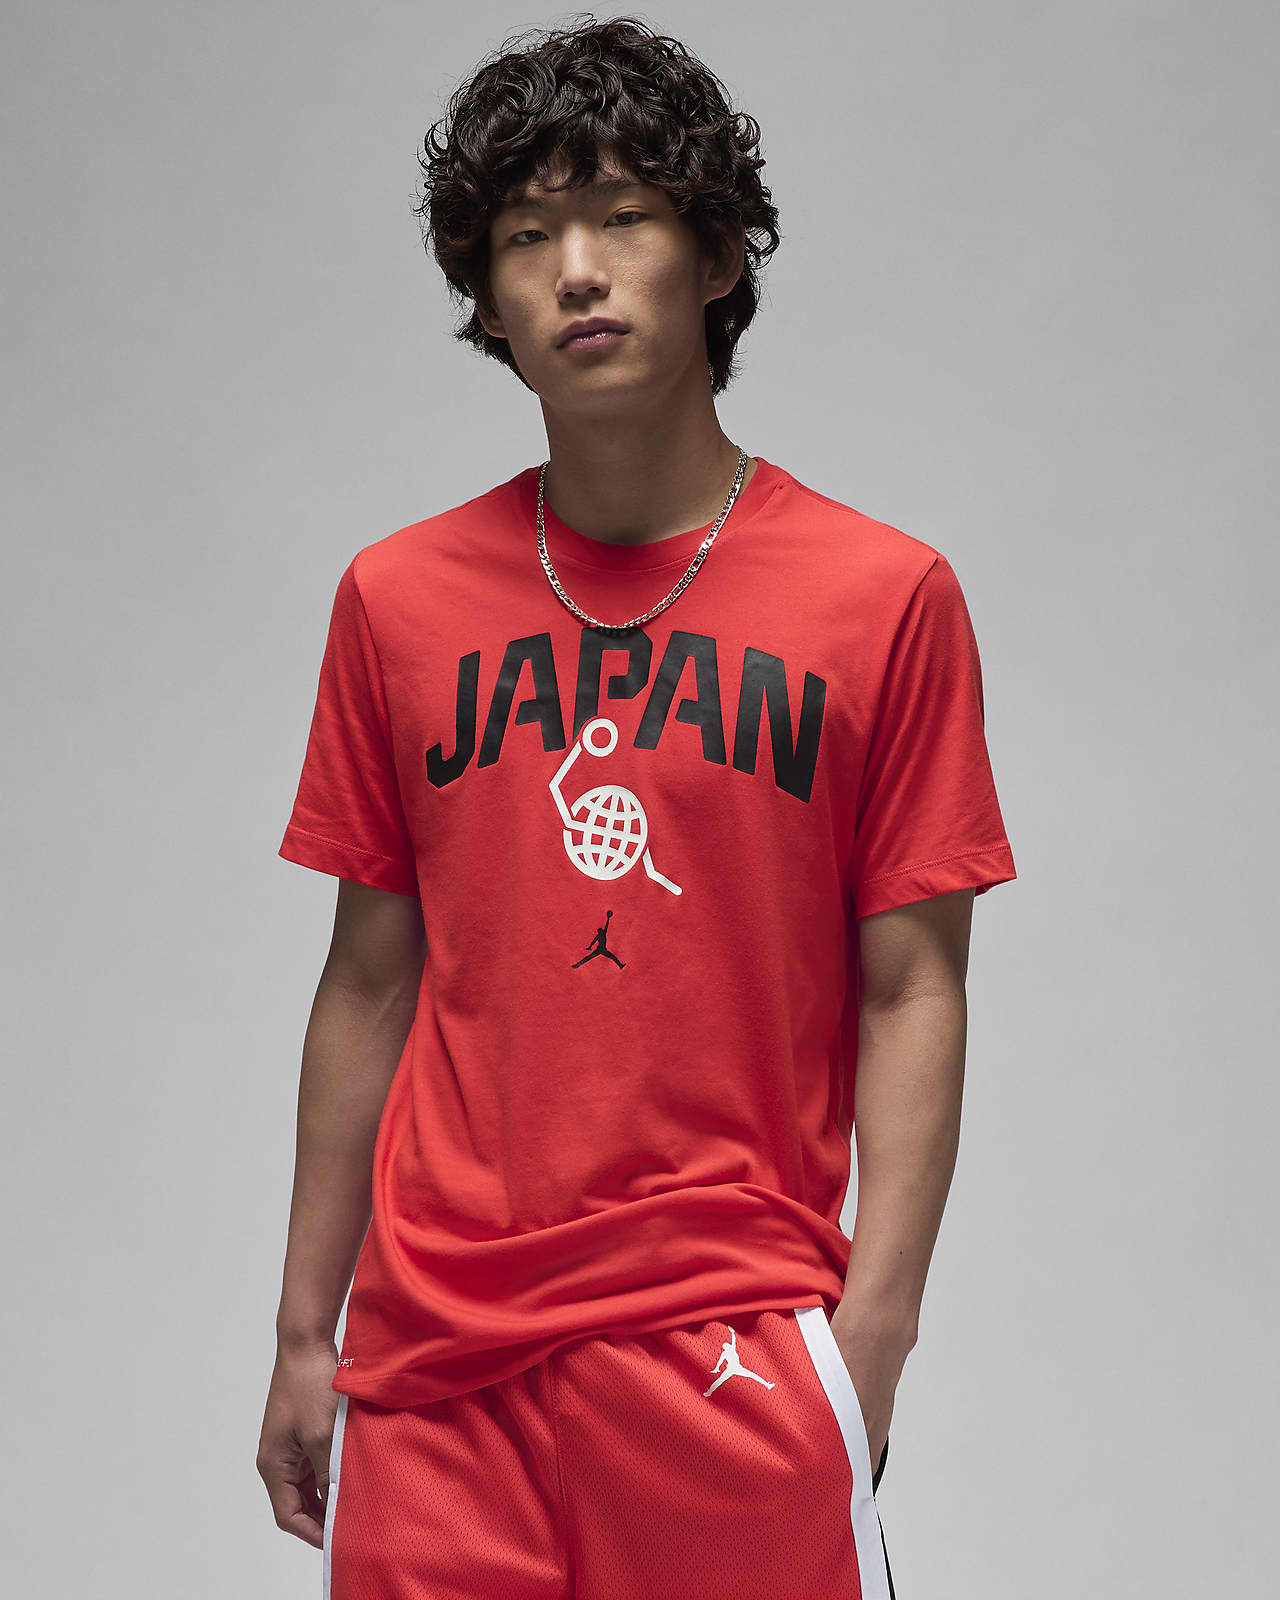 Japan Men's Nike Basketball T-Shirt